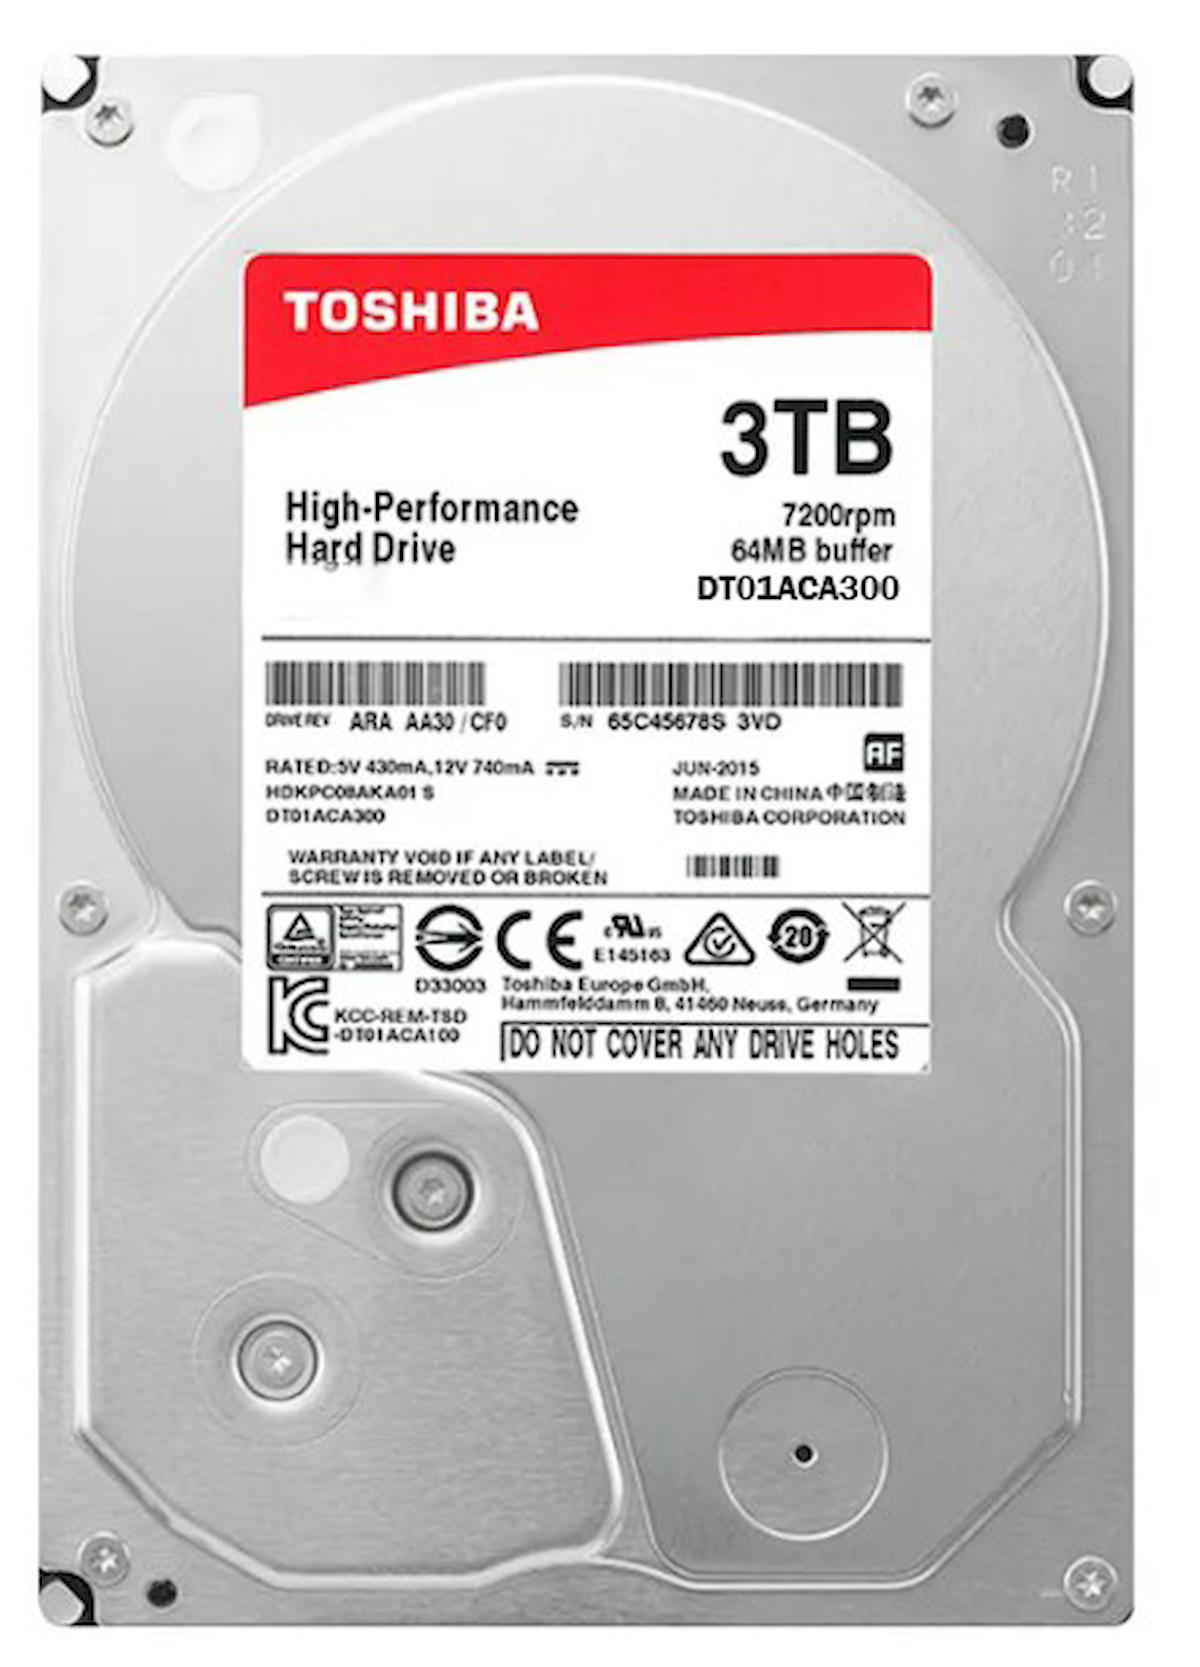 Toshiba DT01ACA300 3 TB 3.5 inç 7200 RPM 64 MB SATA 3.0 Güvenlik Kamerası Harddisk